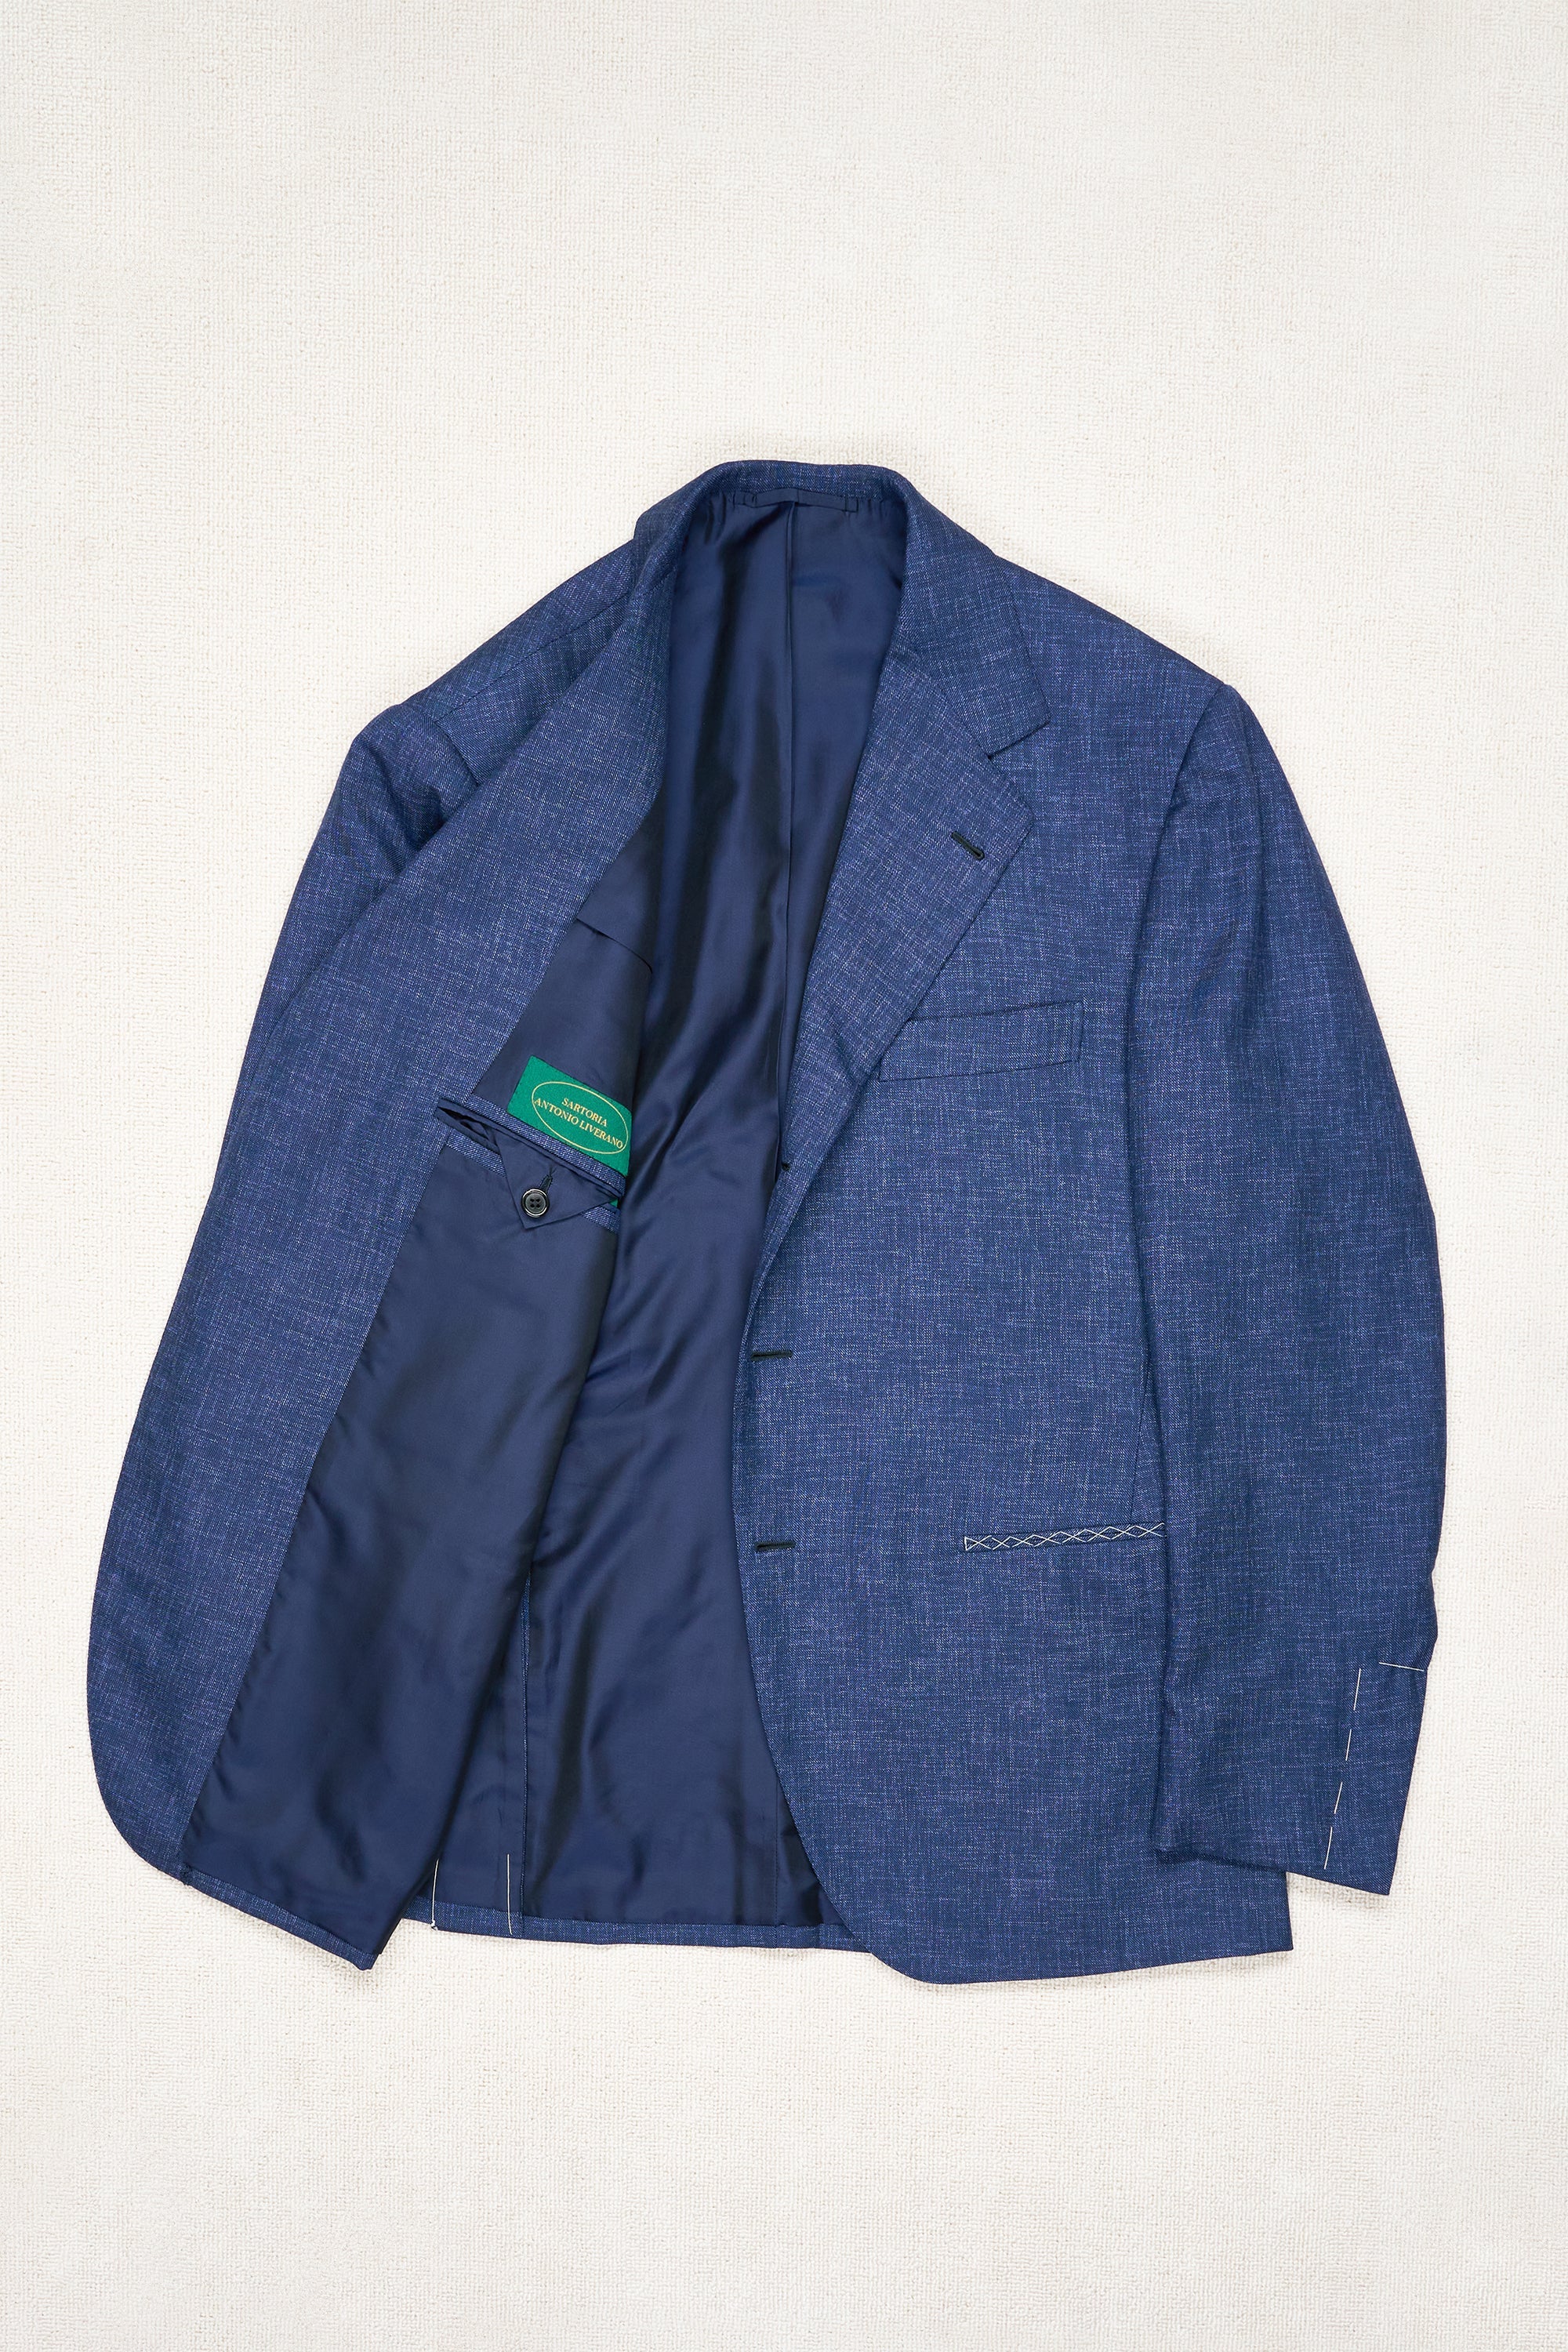 Liverano Blue LPN706039 Wool Sport Coat